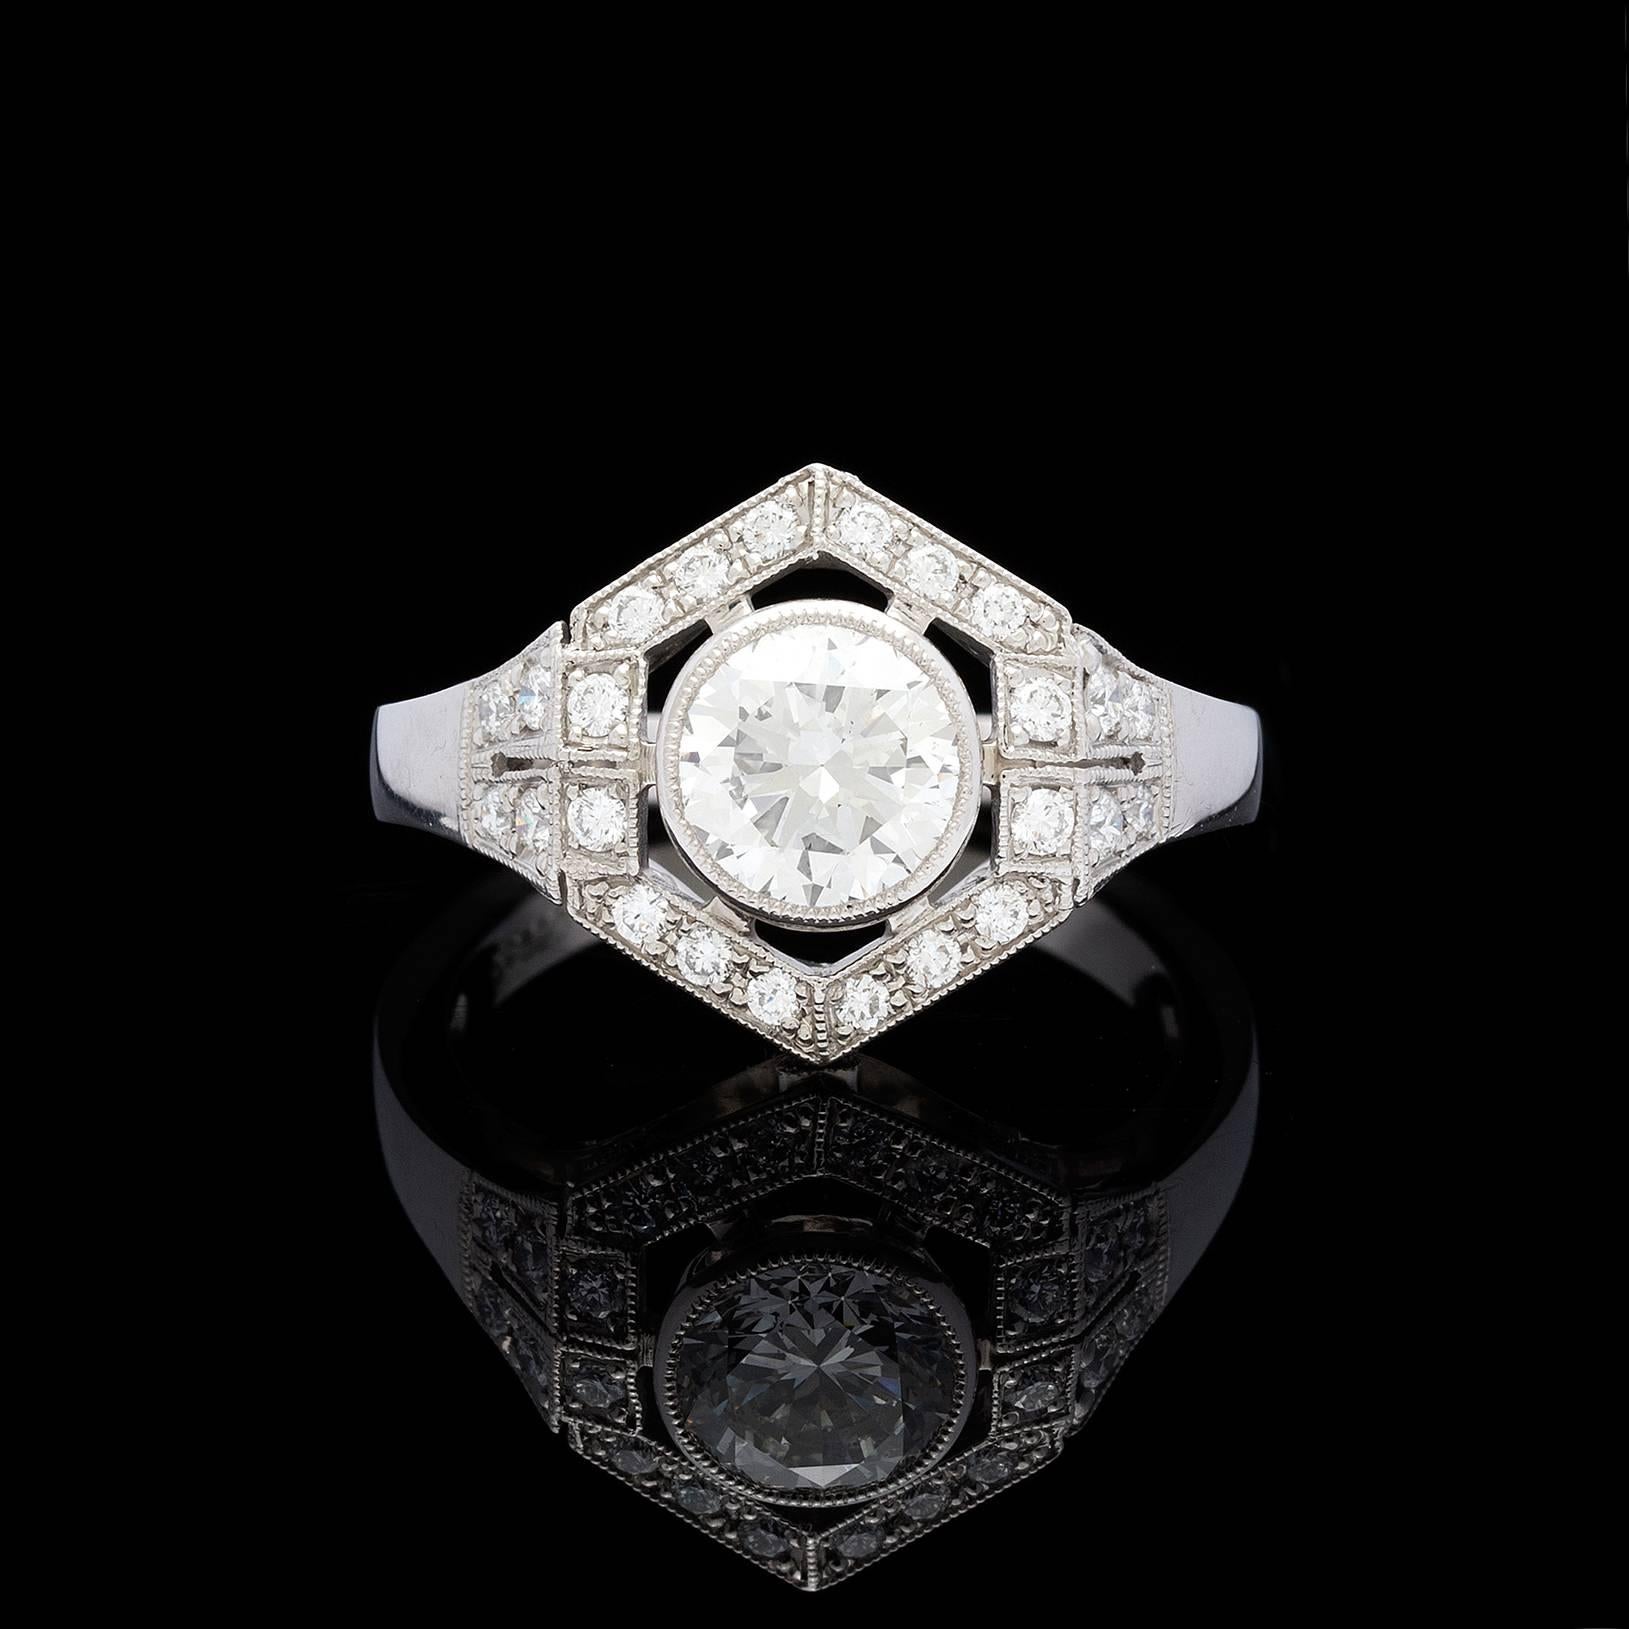 1.18 carat diamond ring